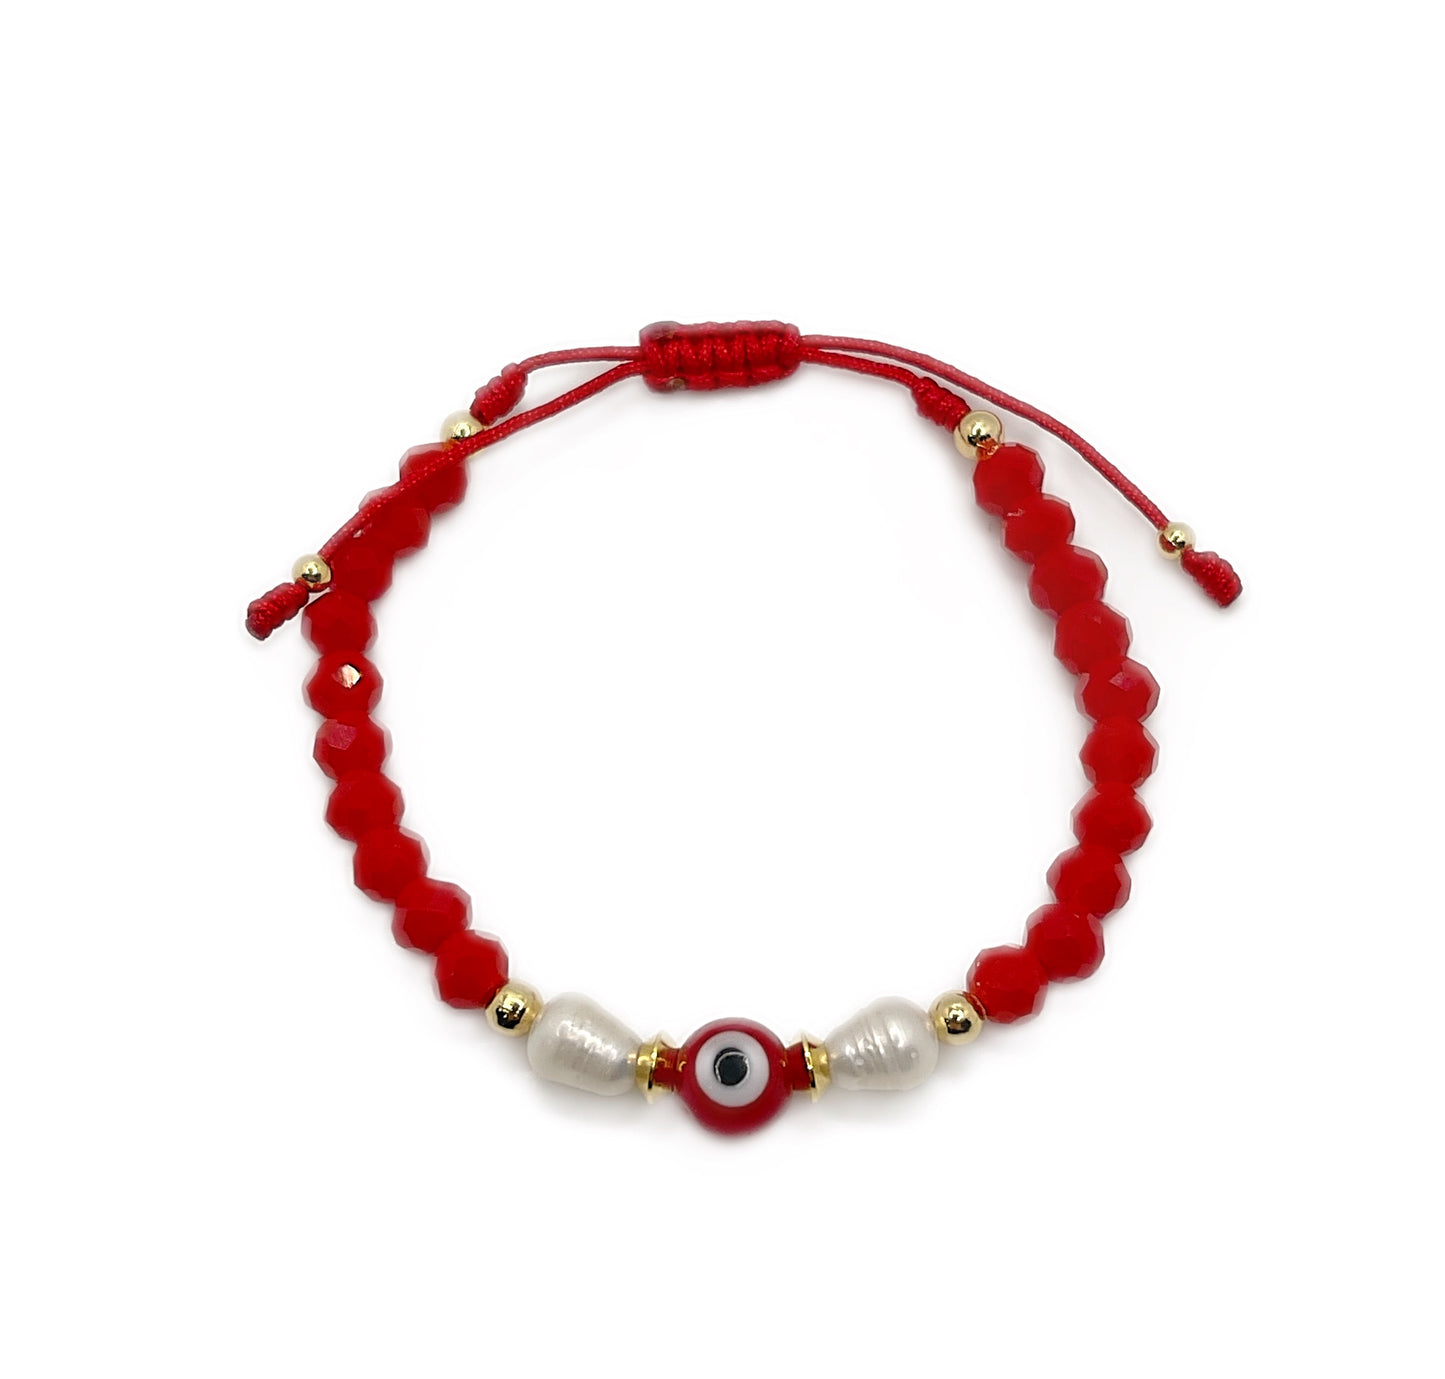 Red Ojito protection bracelet